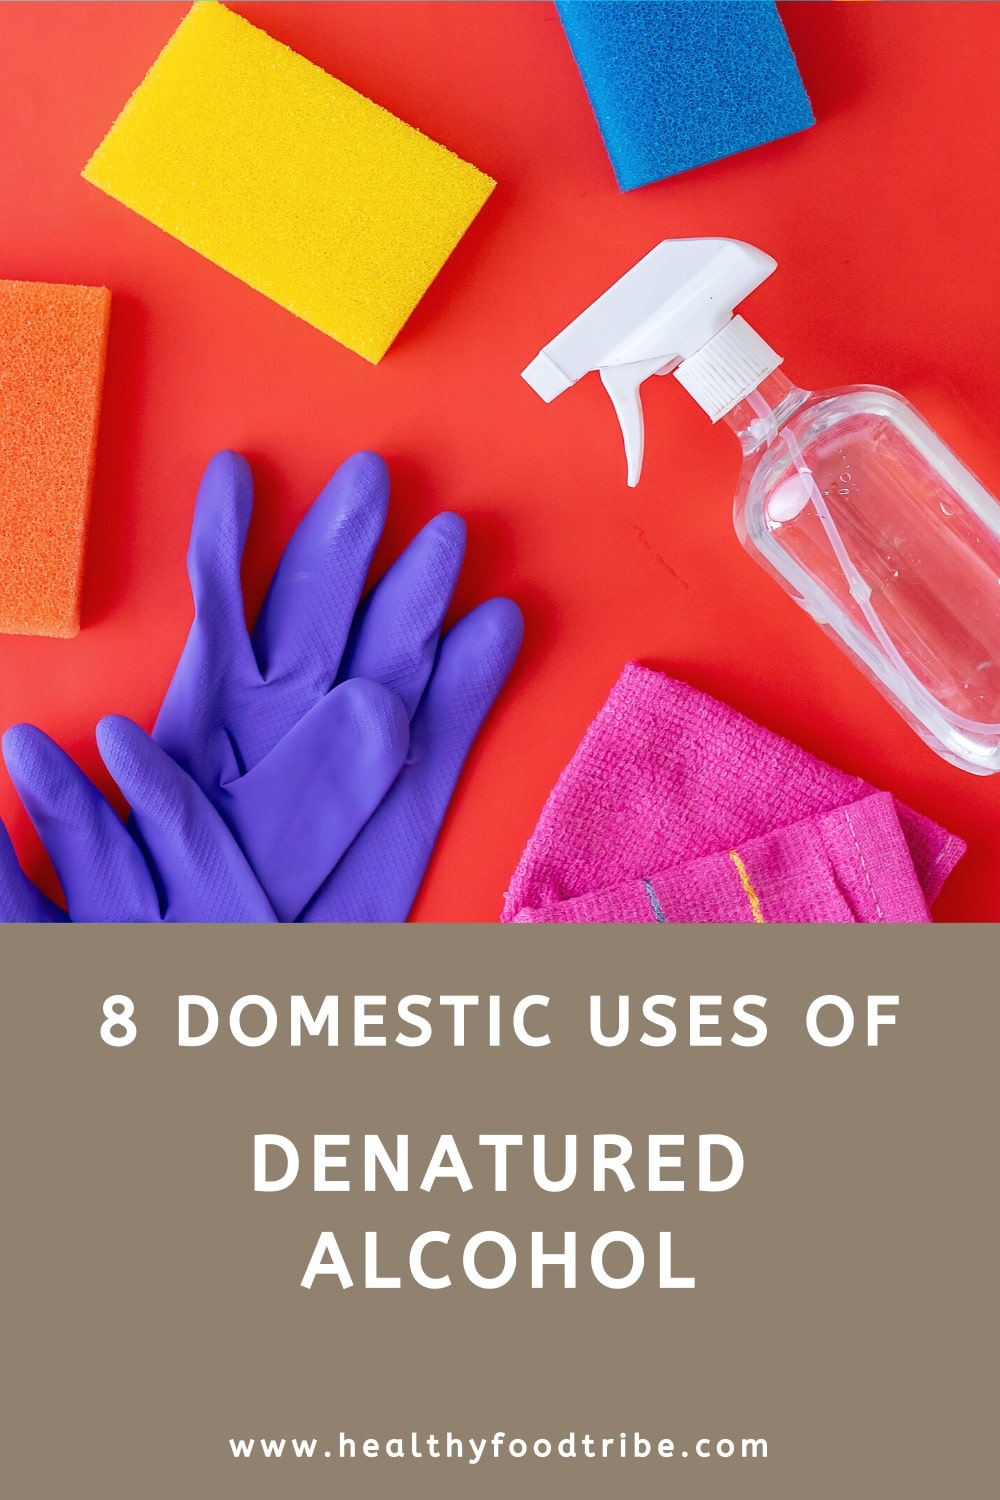 8 Domestic uses of denatured alcohol